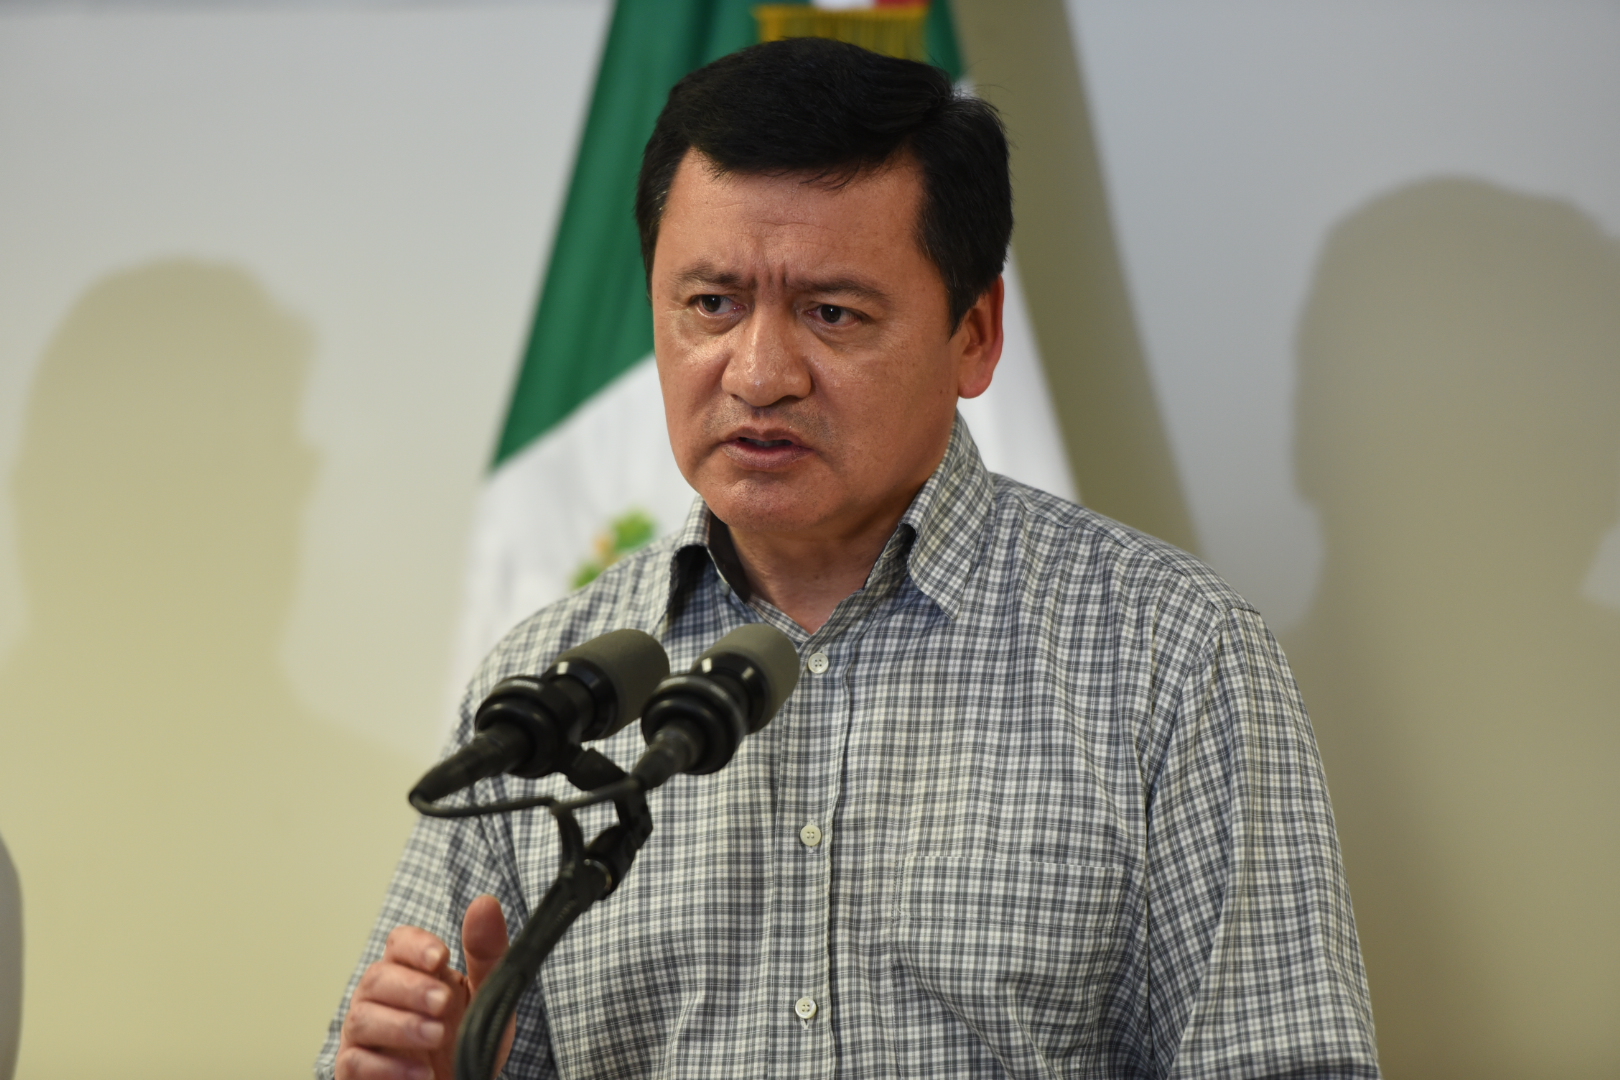  México está en el camino que merece: Osorio Chong